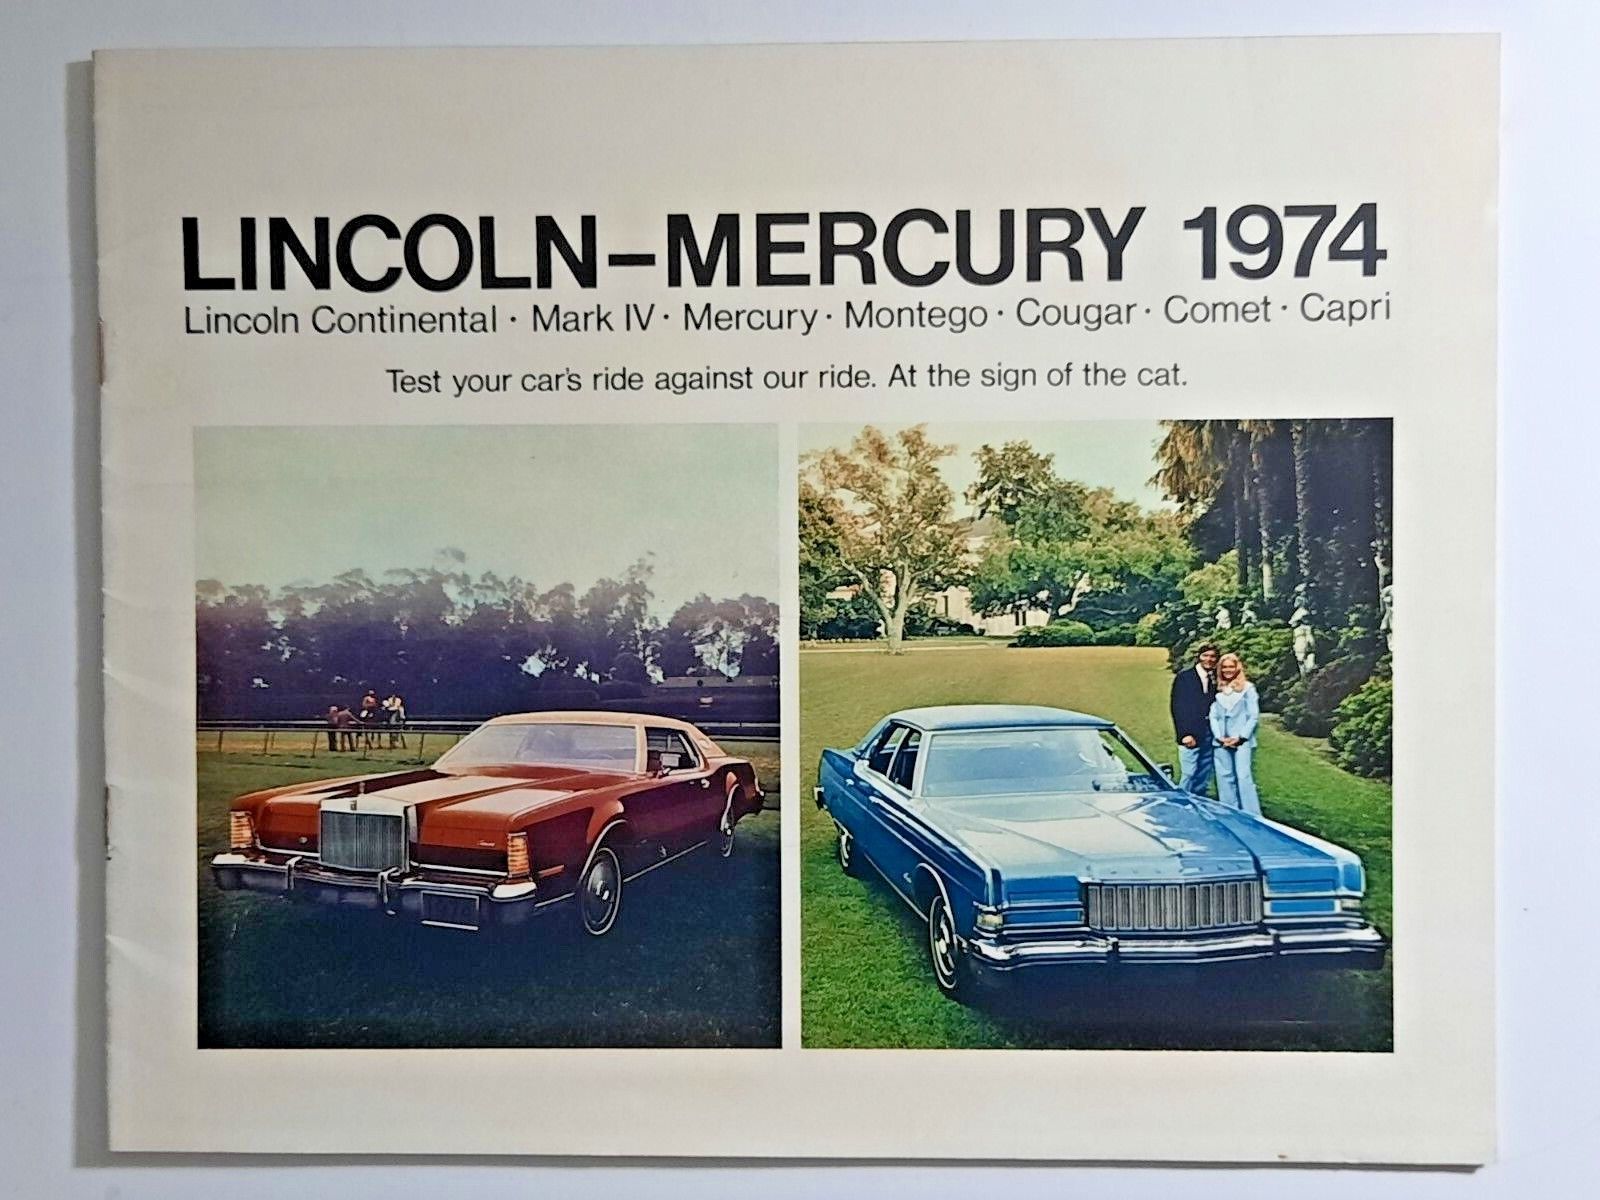 Vintage 1974 Lincoln-Mercury dealership sales brochure